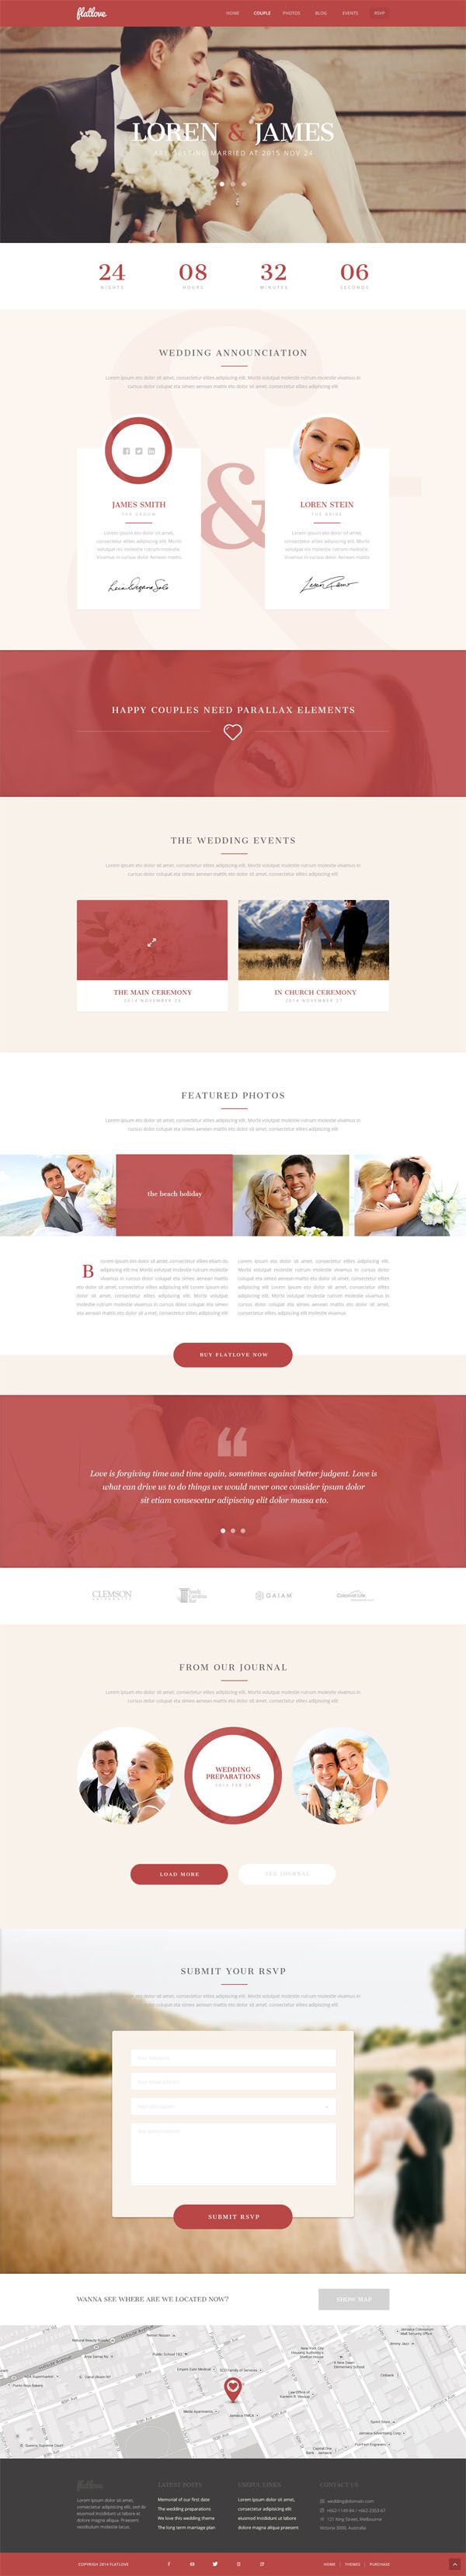 FlatLove-Flat-One-Page-Wedding-HTML5-Template